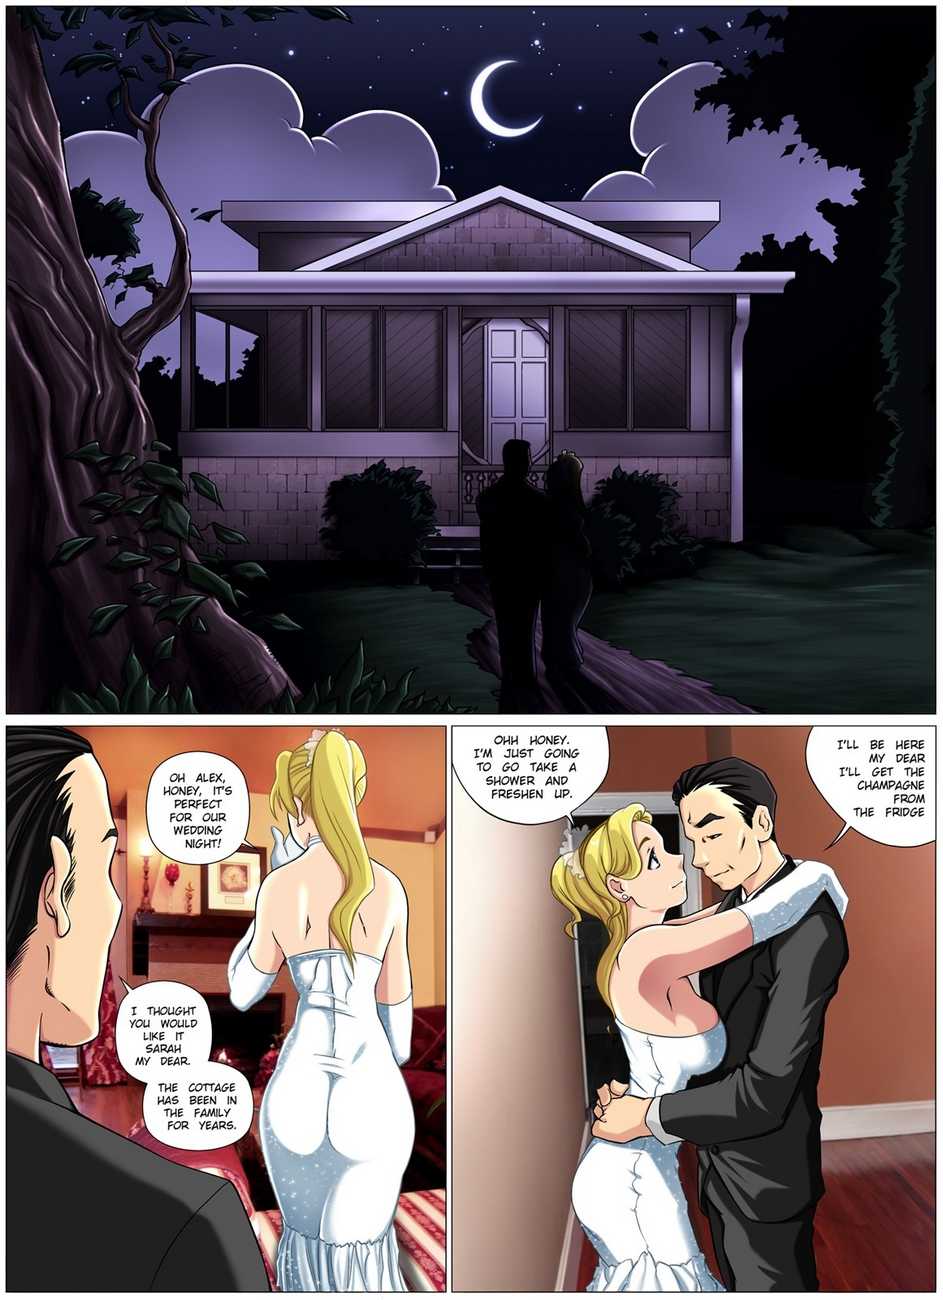 Monster Wedding Night page 2